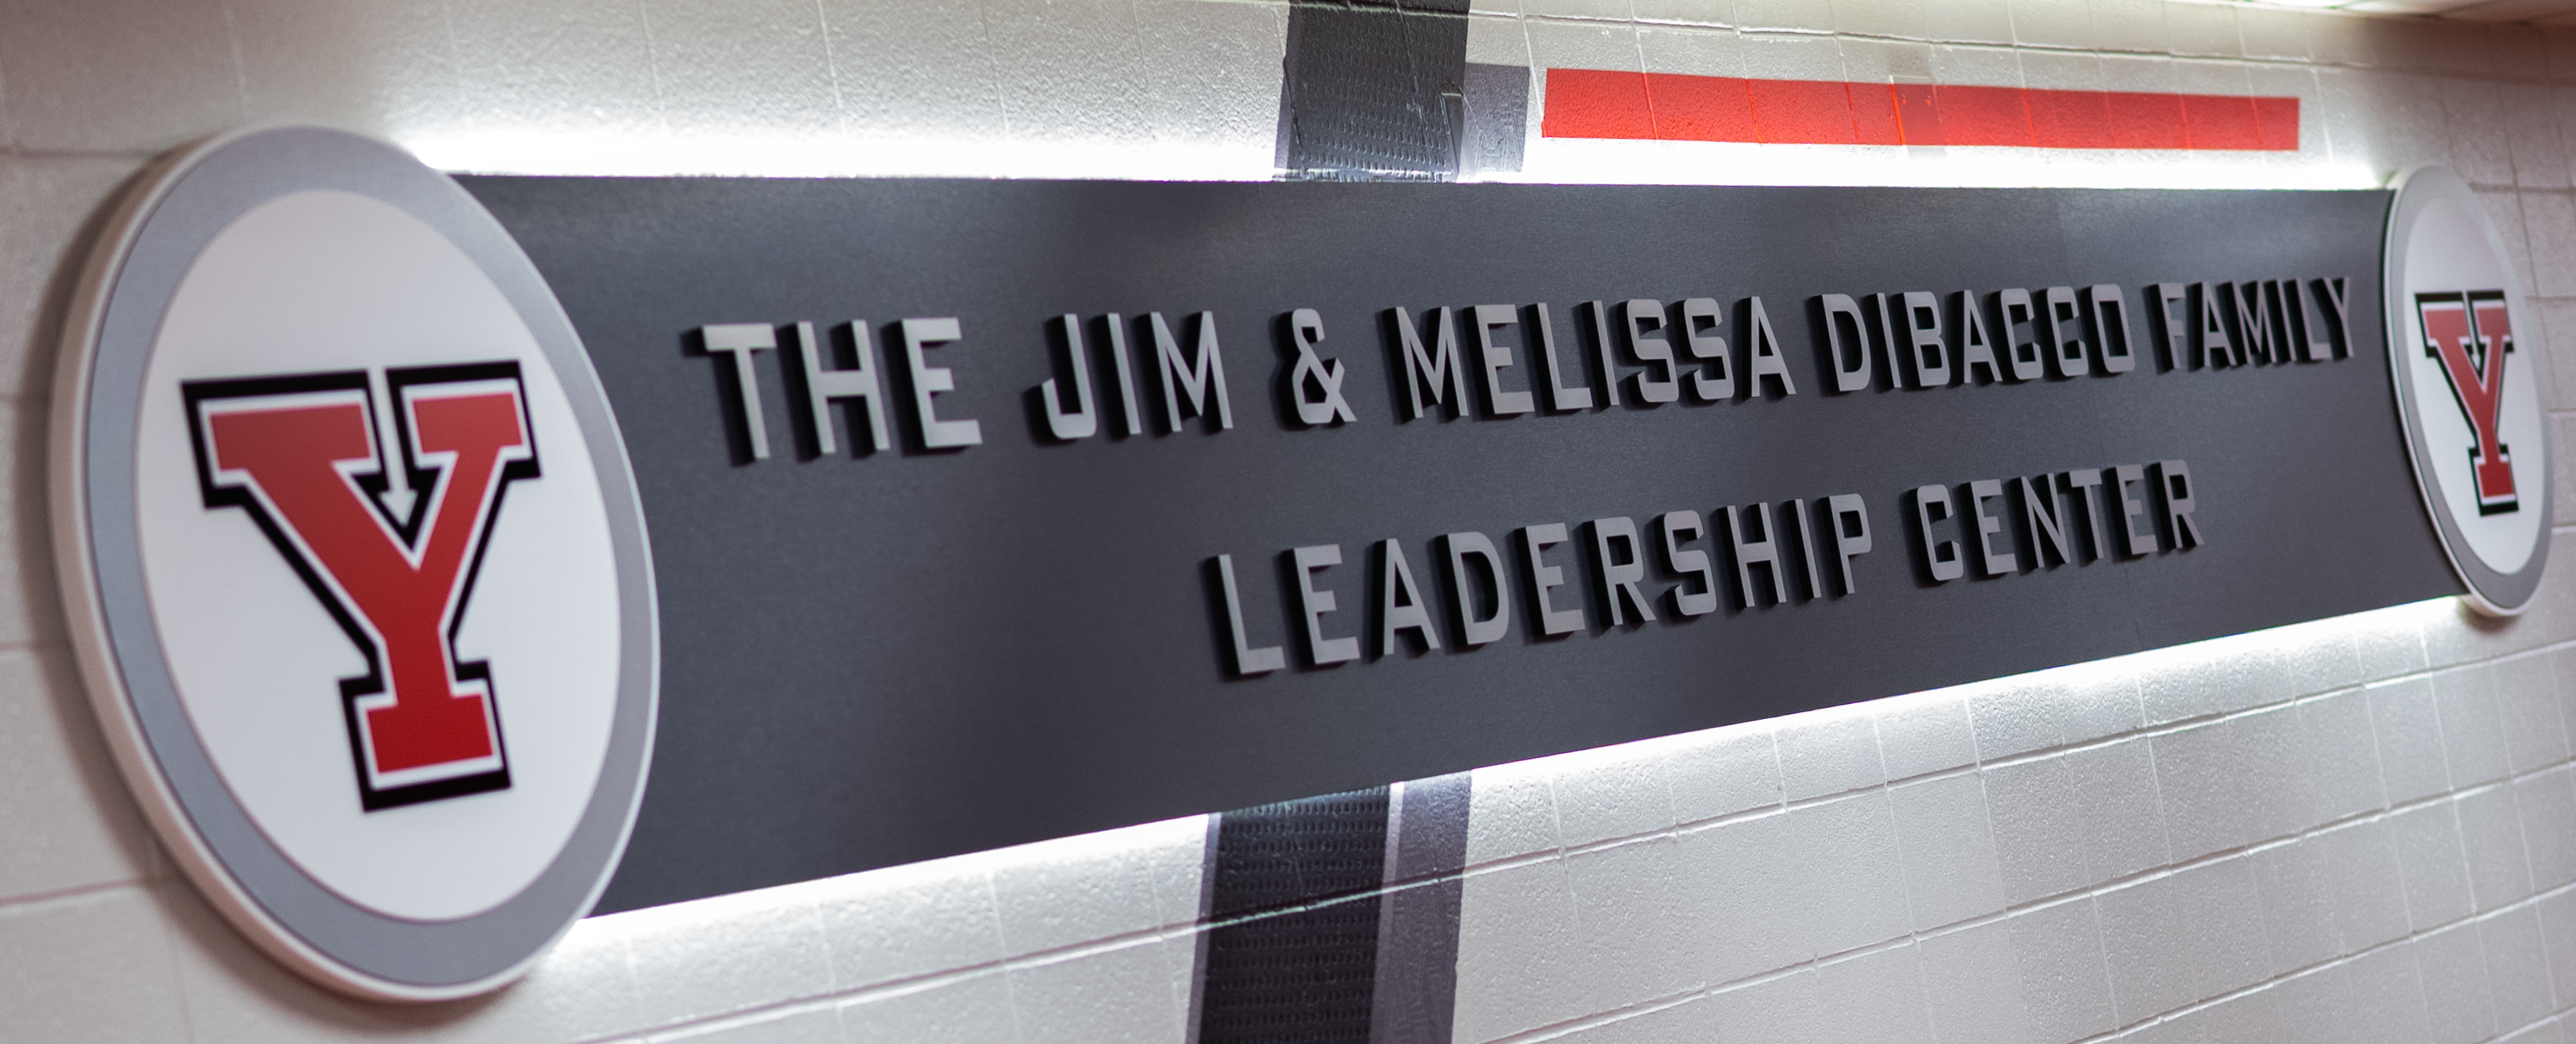 Jim and Melissa DiBacco Family Leadership Center